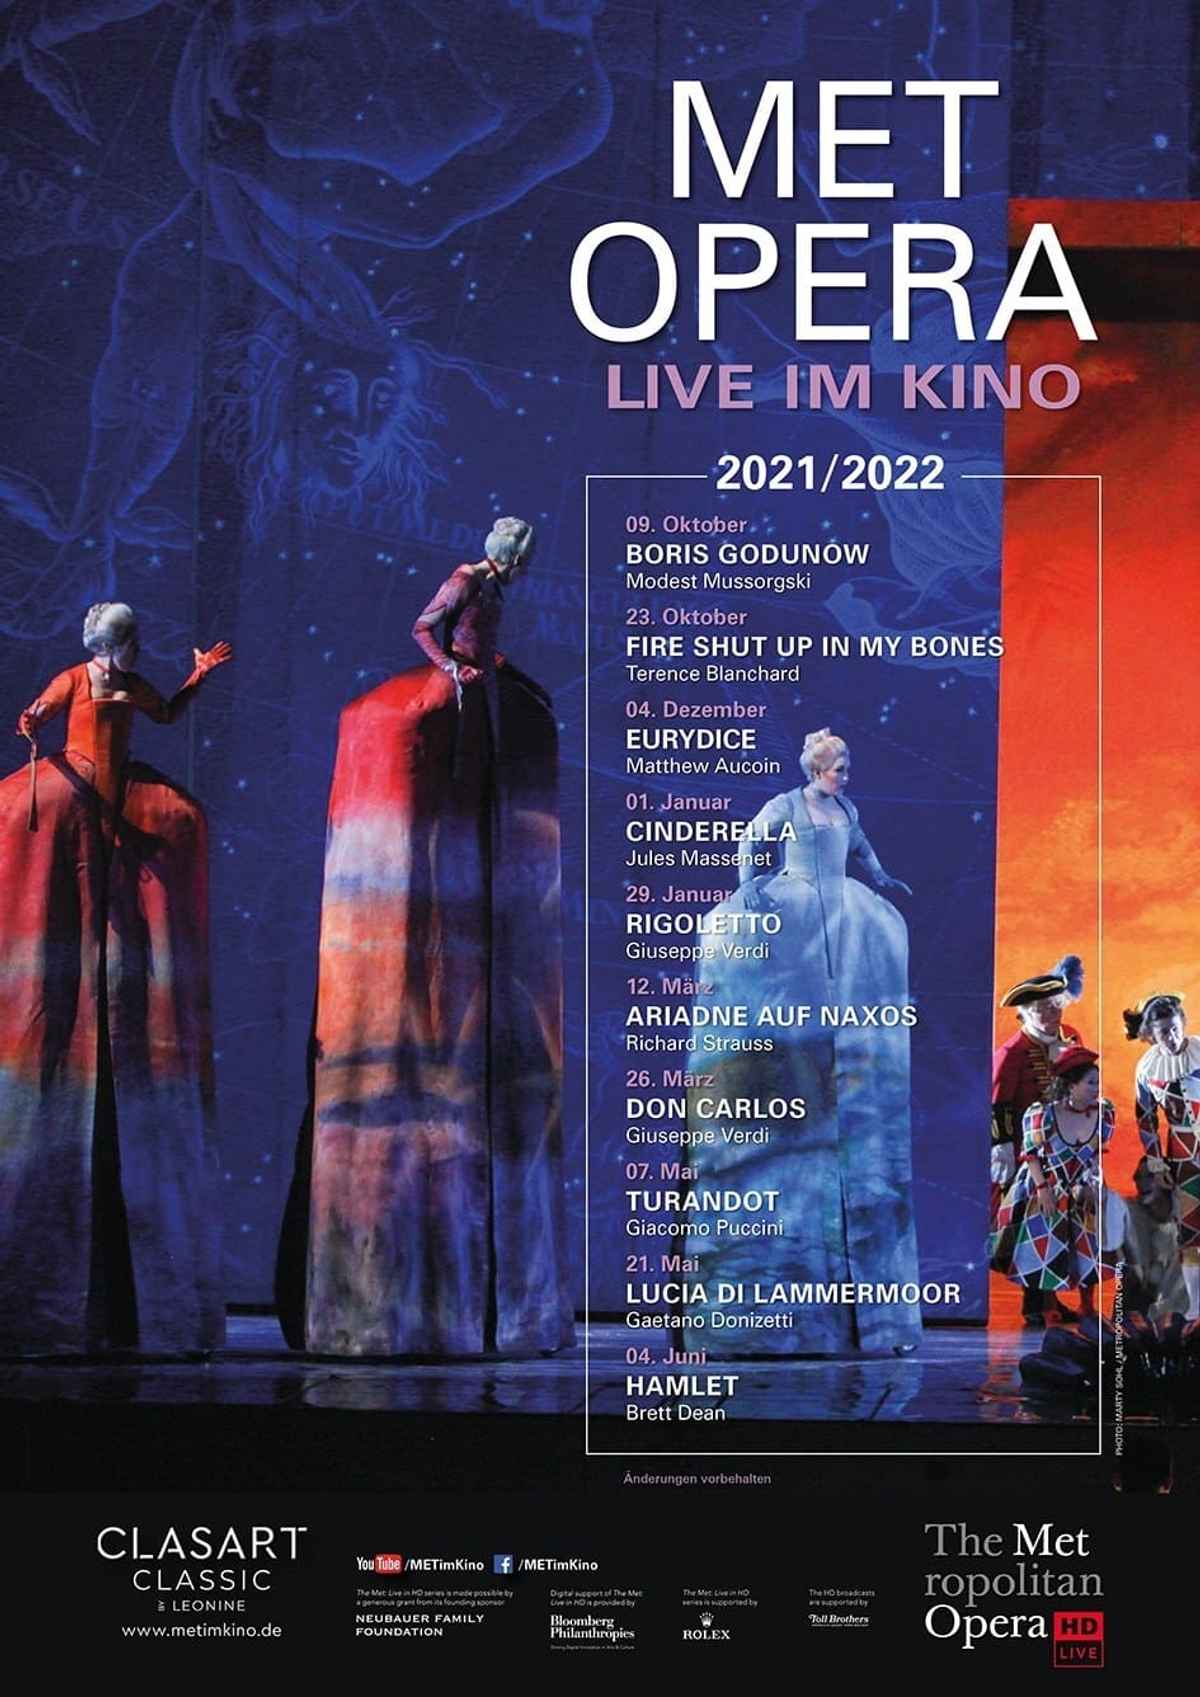 Met Opera 2021/22 Giuseppe Verdi RIGOLETTO Movie (2022) Release Date, Cast, Trailer, Songs